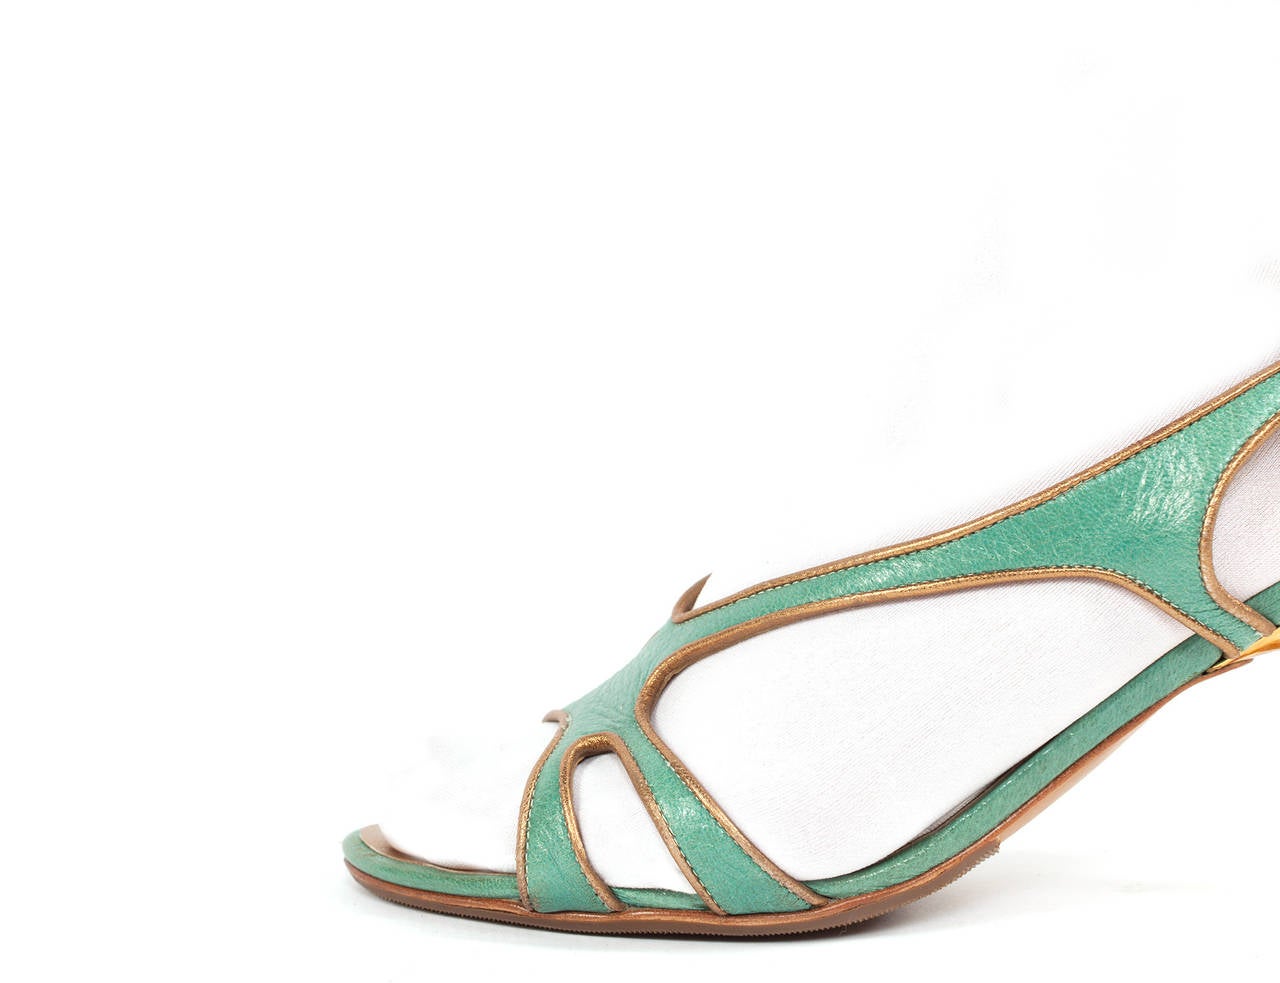 Escada Celadon green sling back heels with gold interior, Sz. 8.5 For Sale 4